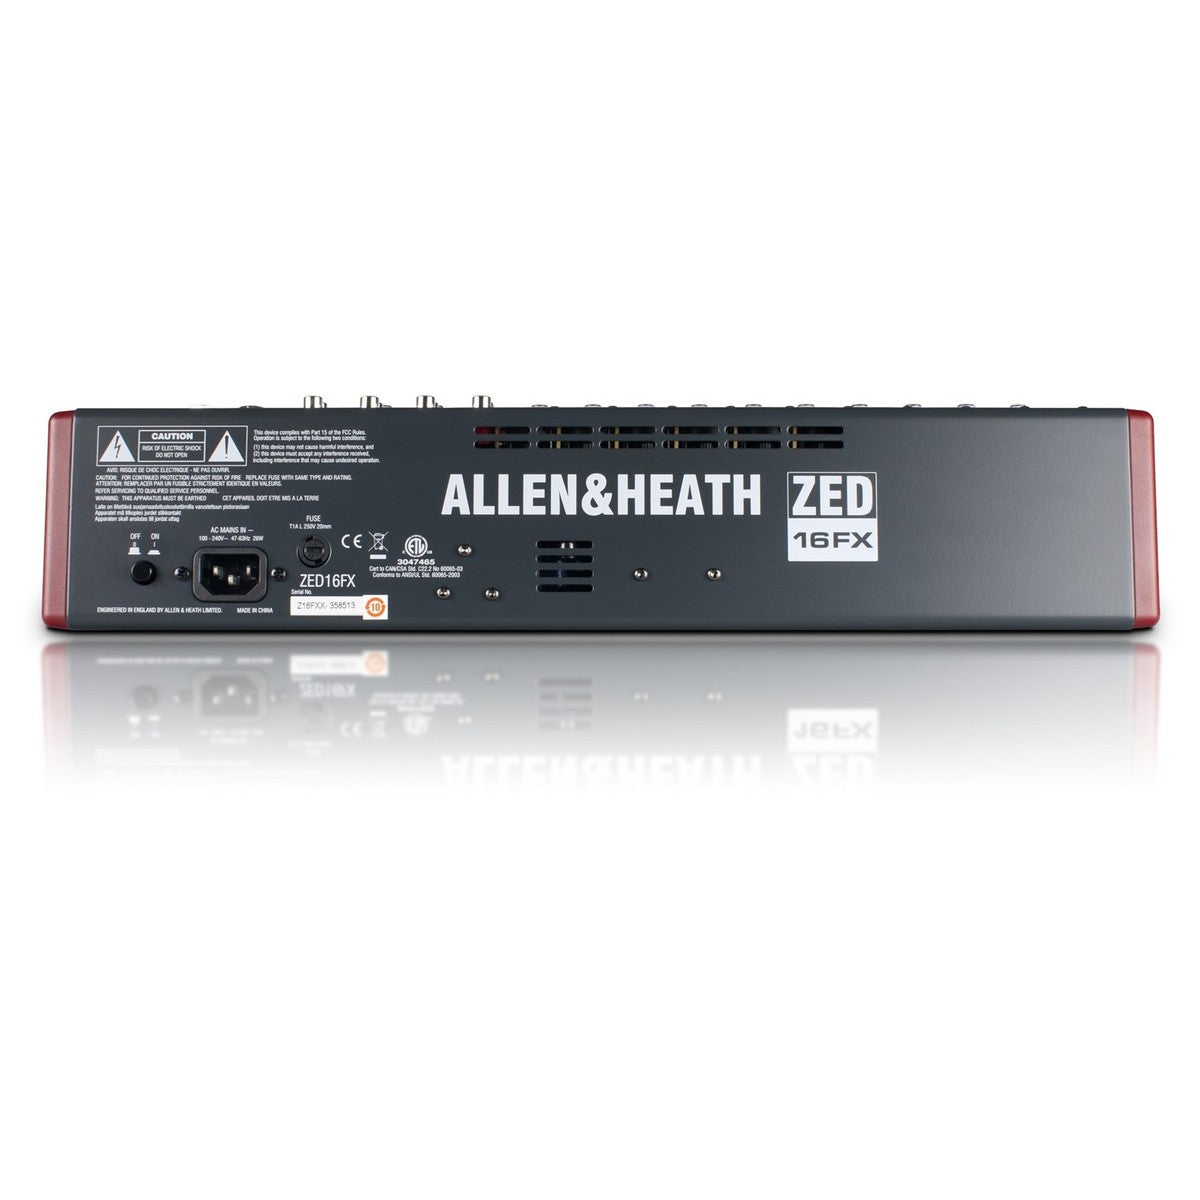 Allen & Heath ZED-16FX 16-channel Mixer with USB Audio Interface & Effects